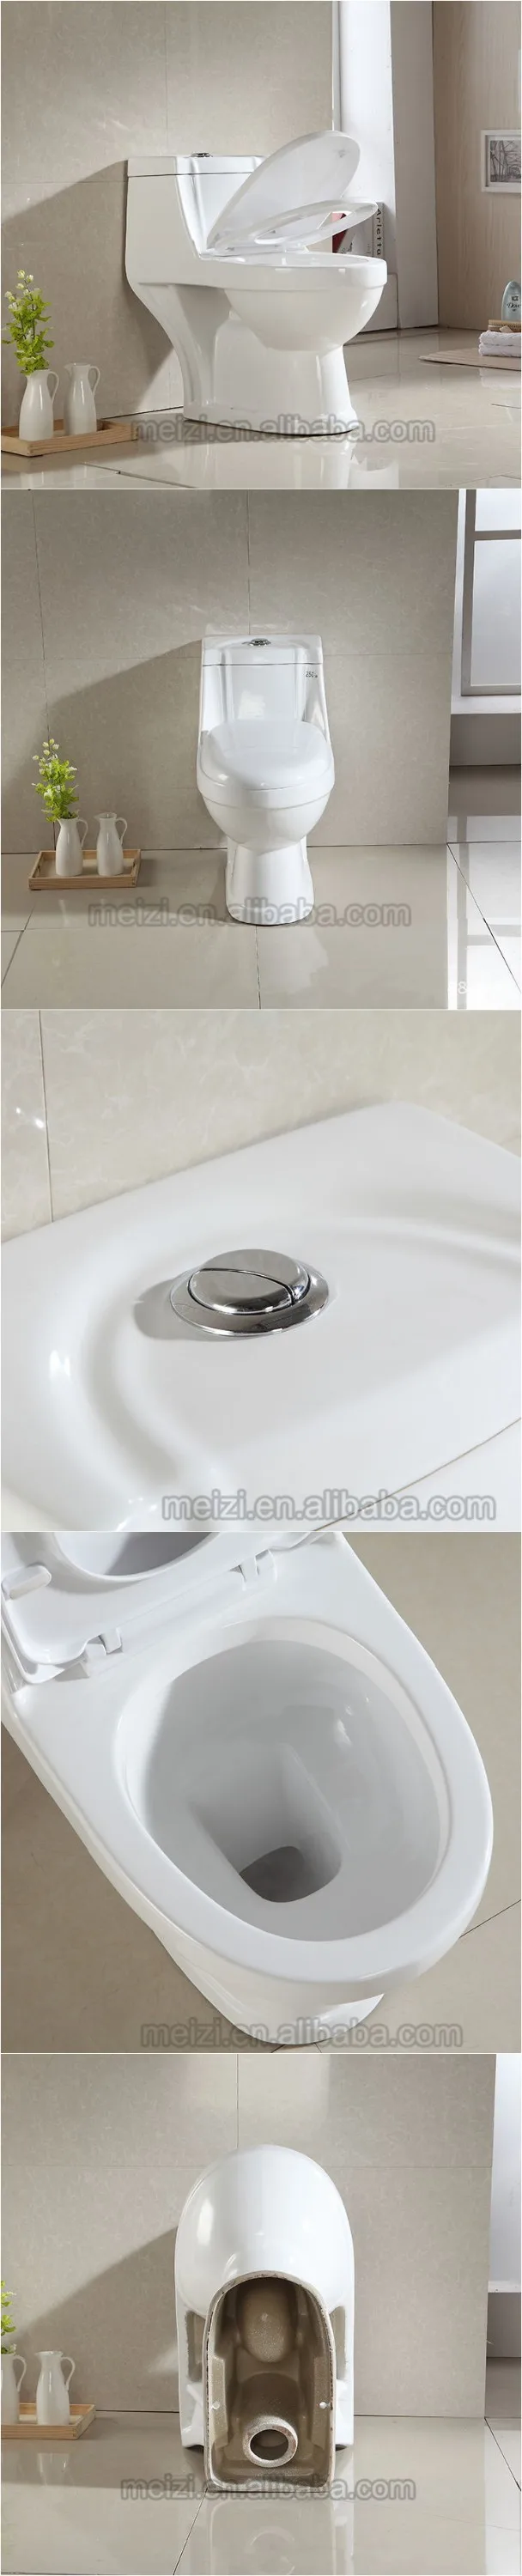 Dry Flush Waterless Chemical Easy Toilet Price